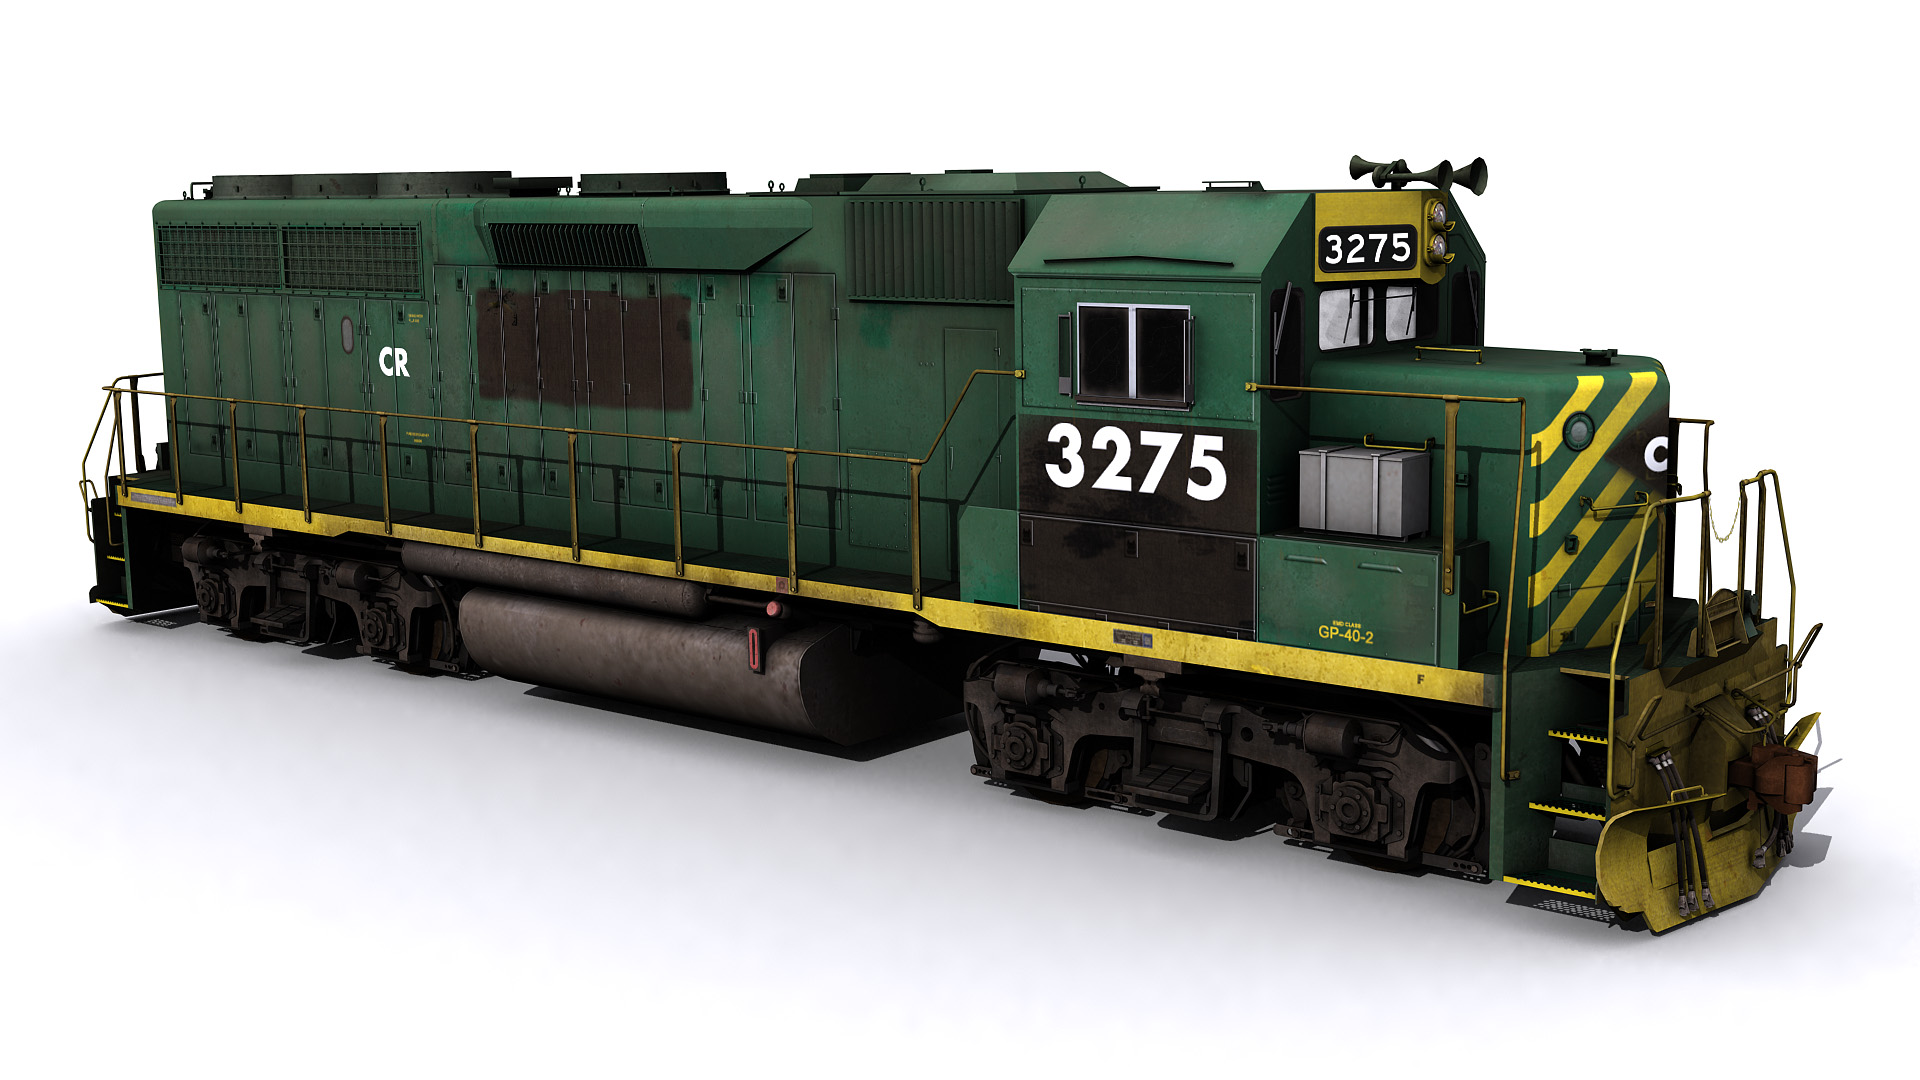 The Creexrdg a green rail engine